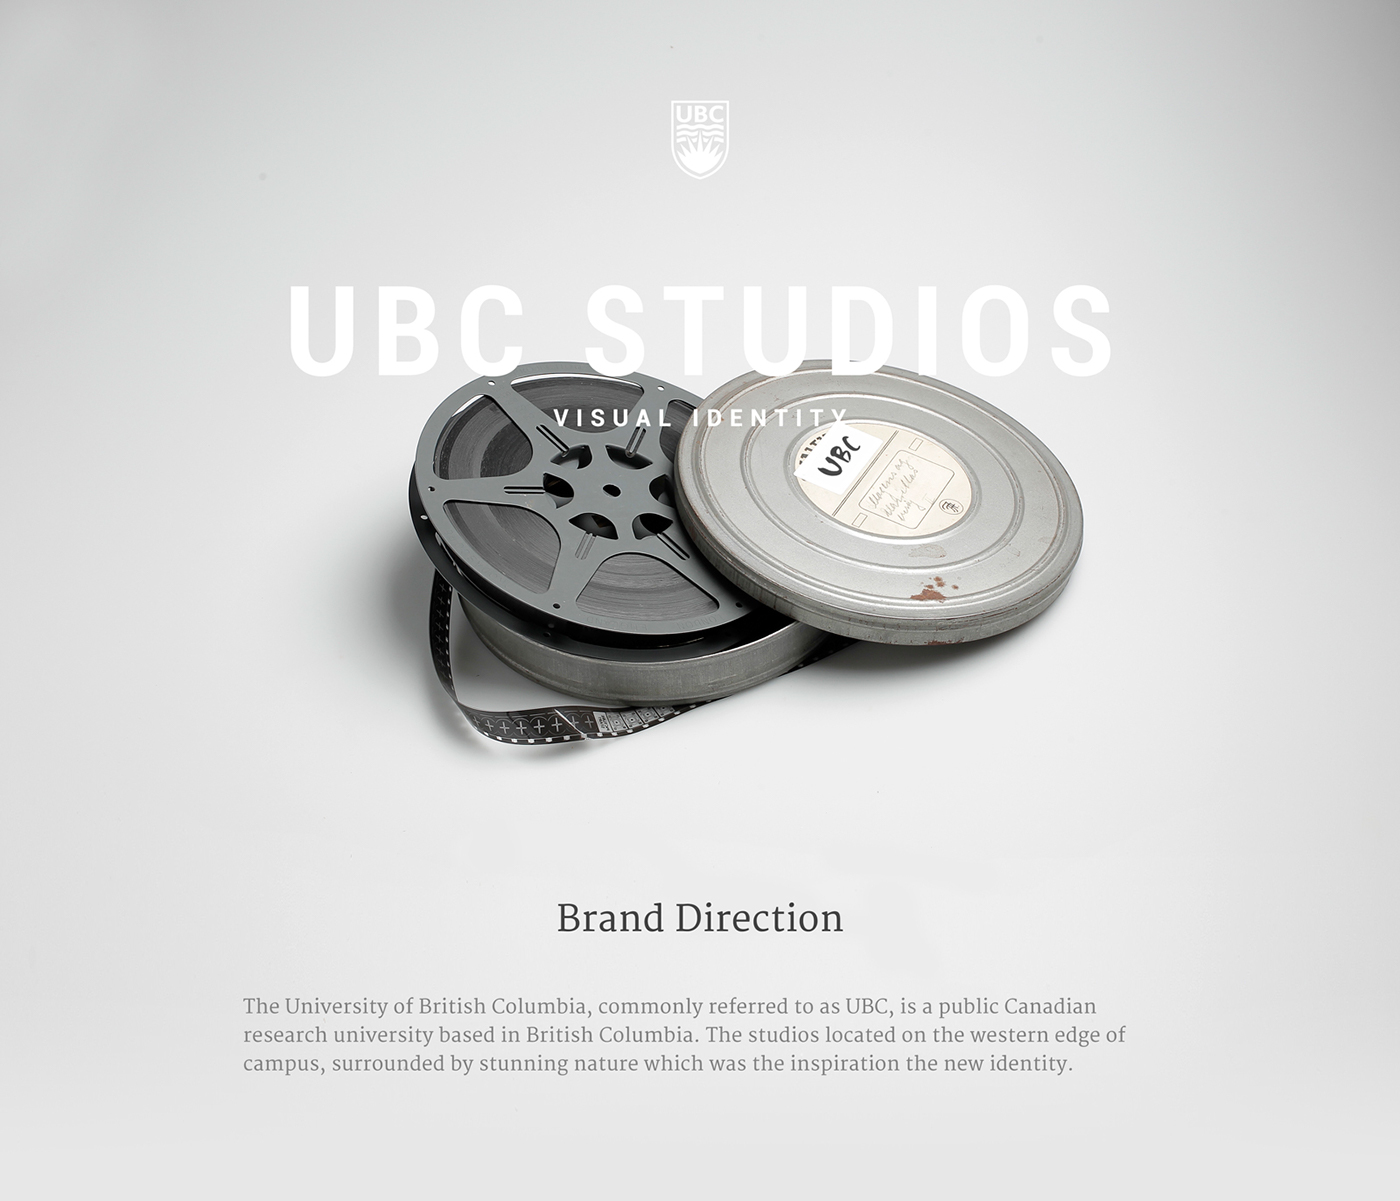 identity brand ubc University British Columbia University movie studio Video Production